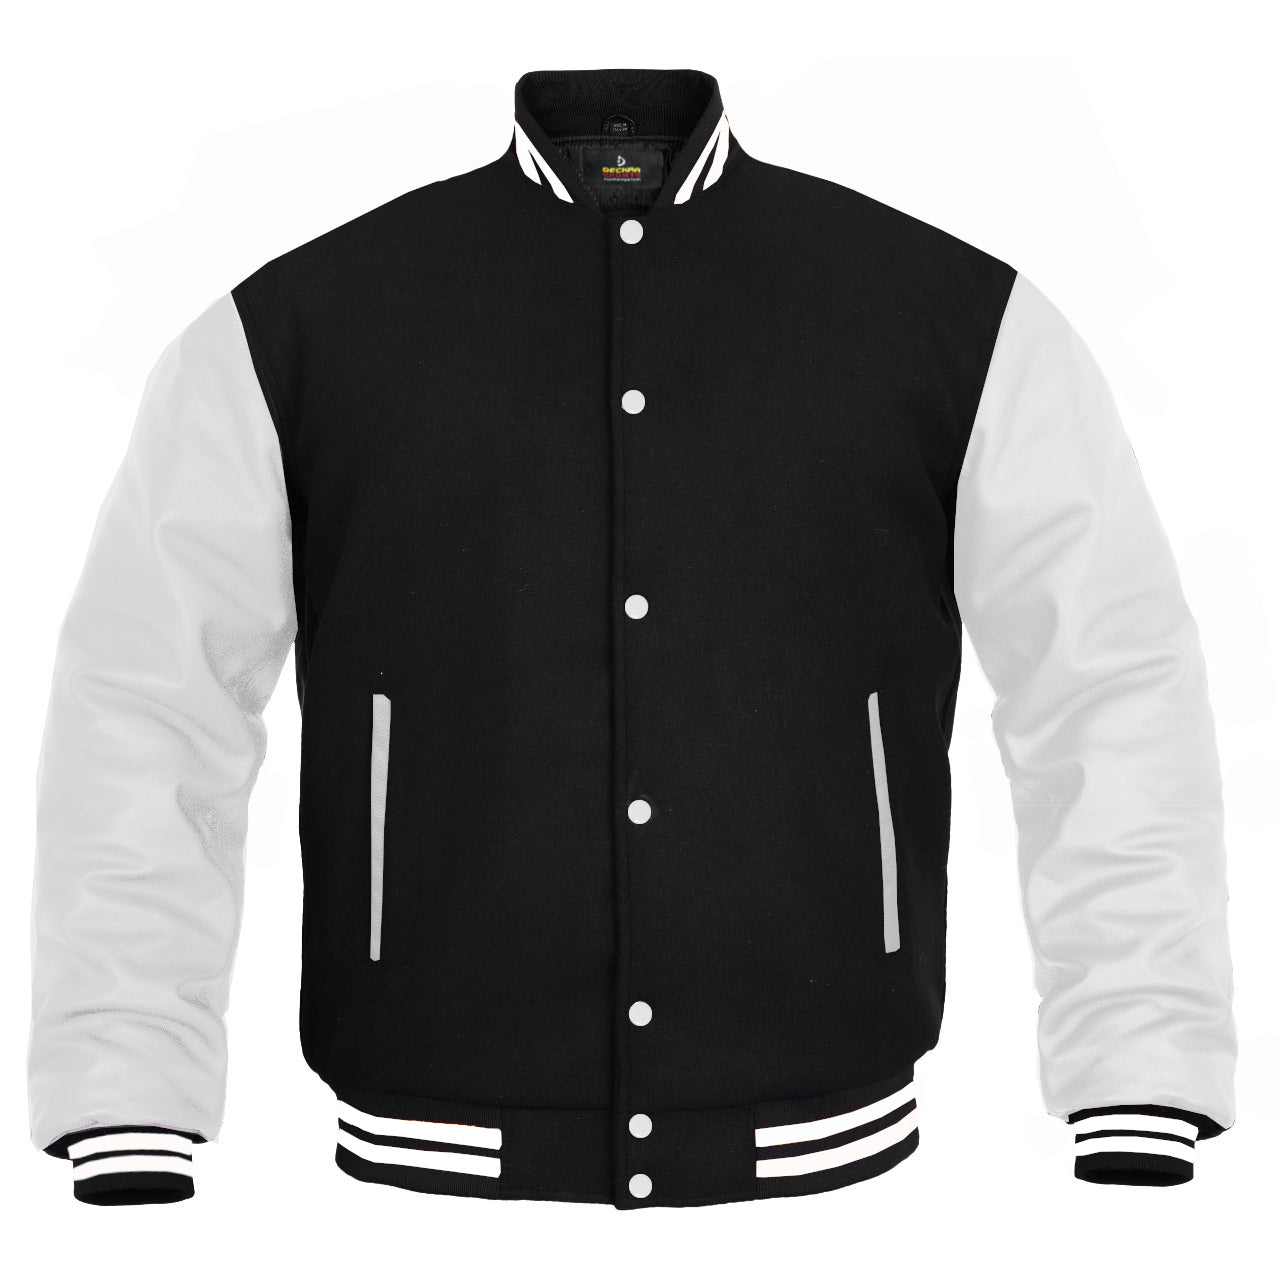 Men’s Varsity Jacket Genuine Leather Sleeve and Wool Body Black/White